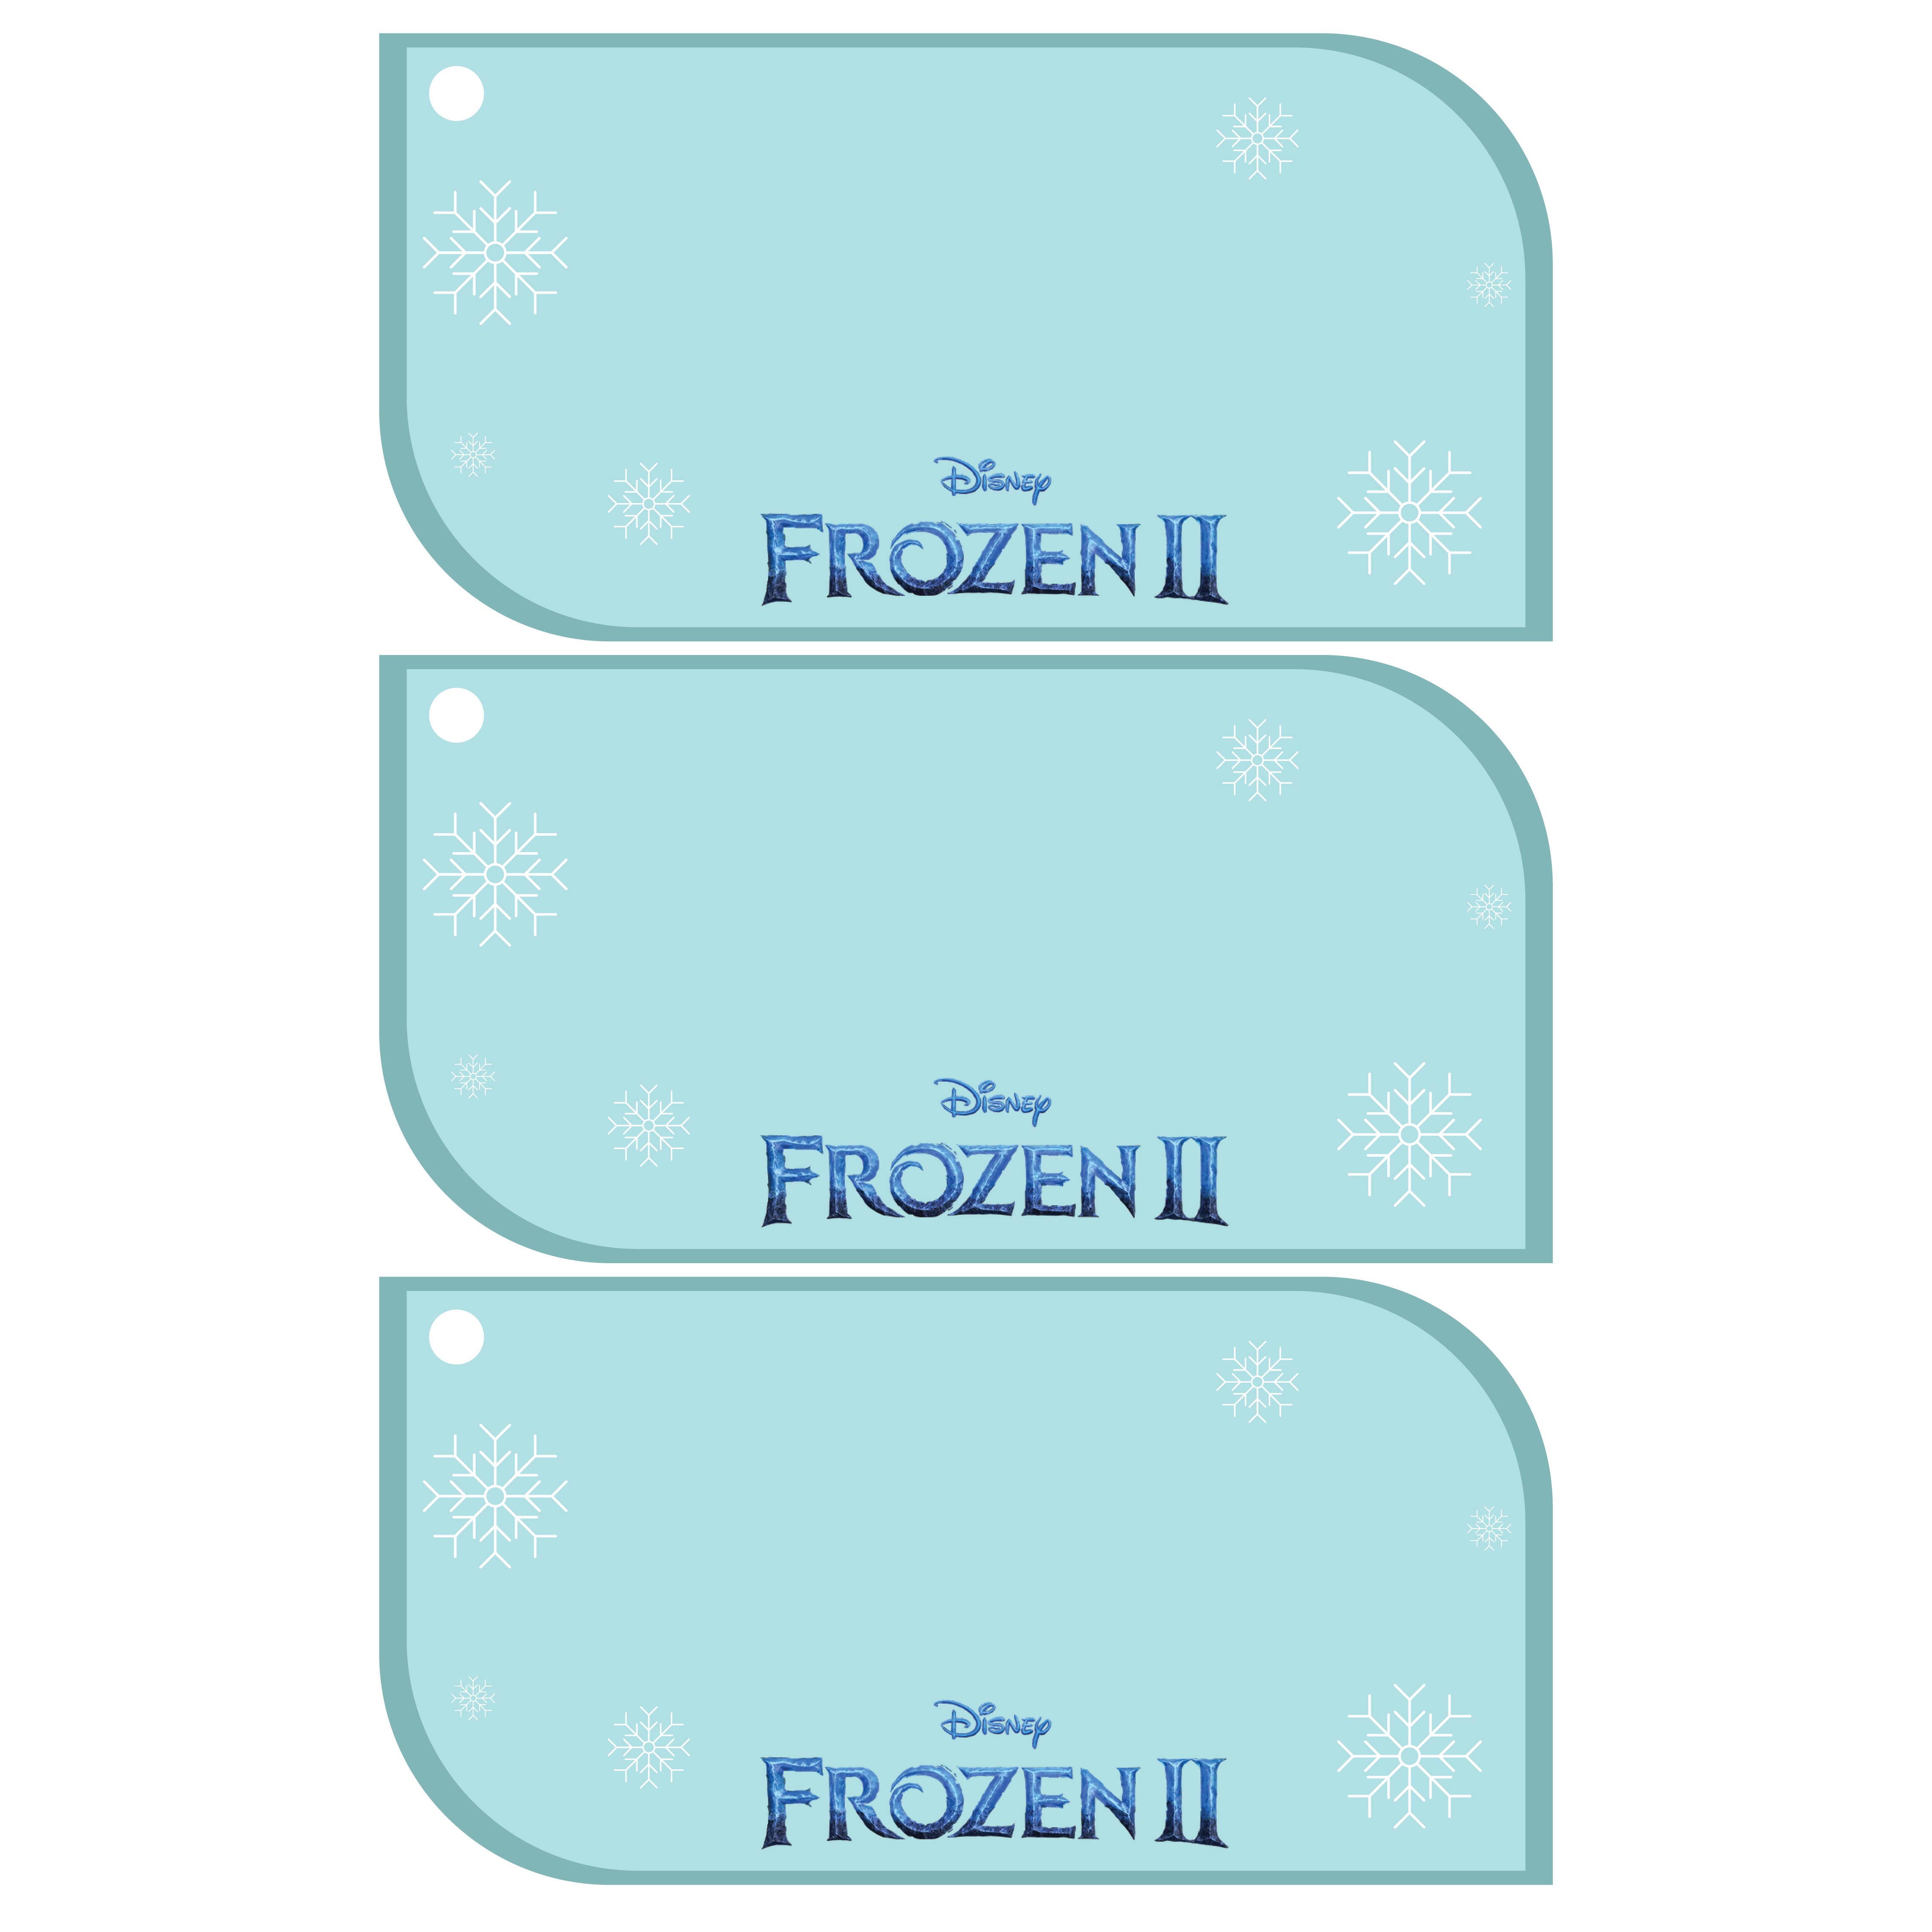 Printable Christmas Gift Tags Disney Frozen